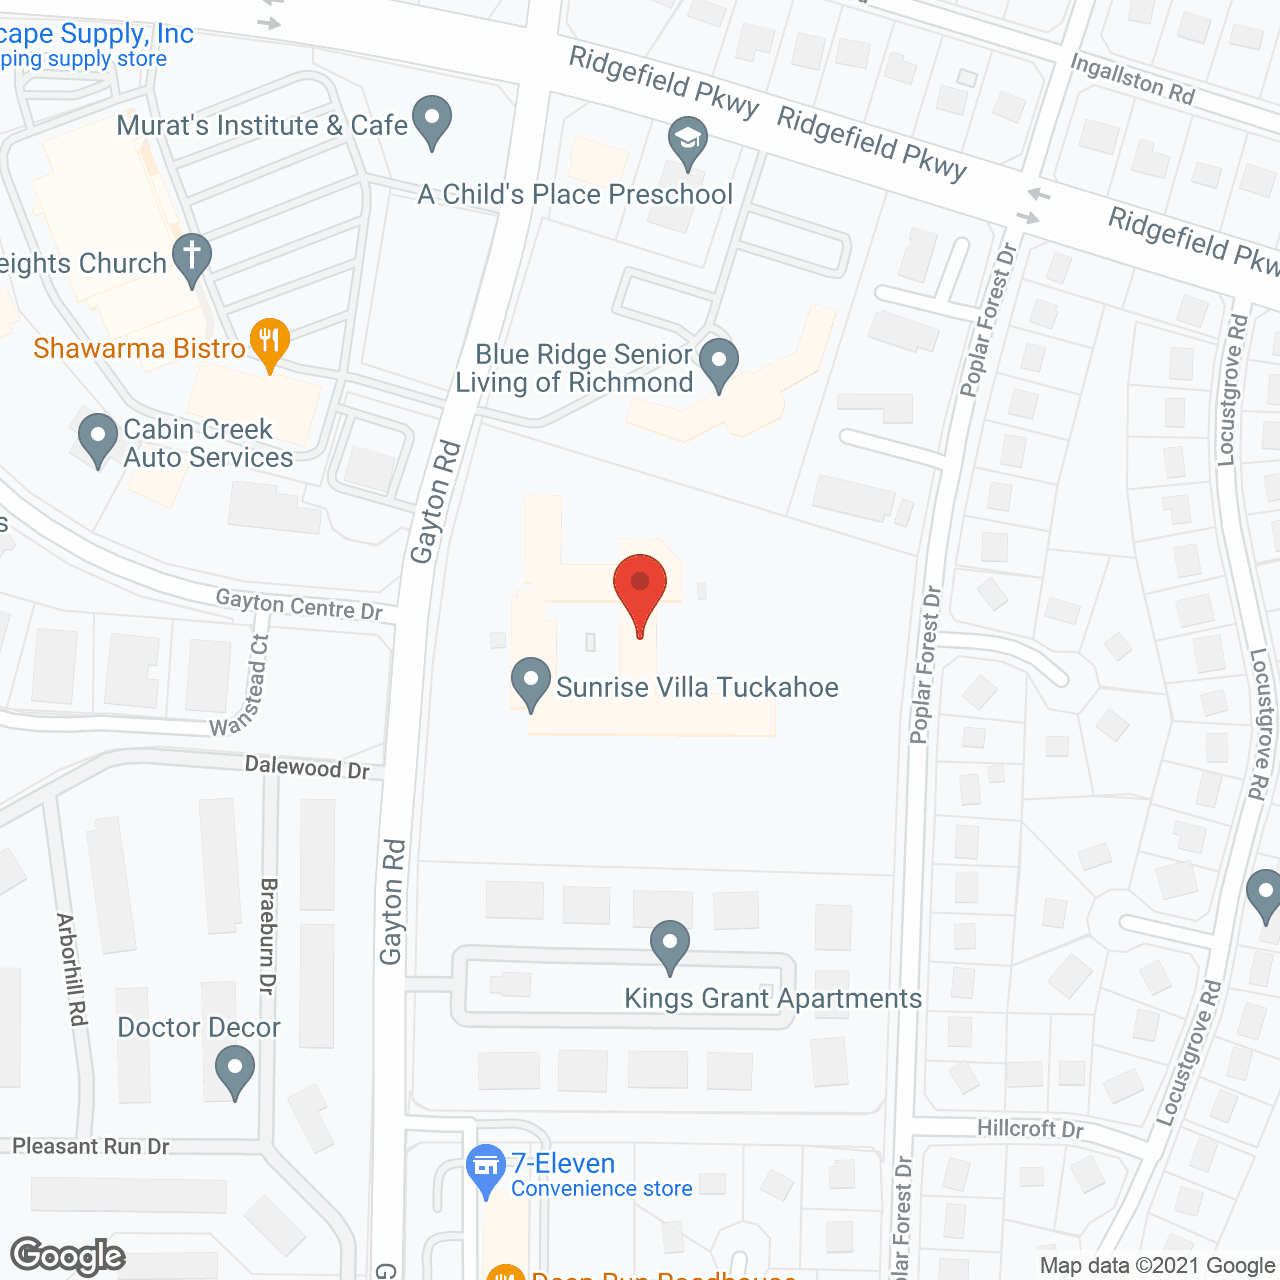 Sunrise Villa Tuckahoe in google map